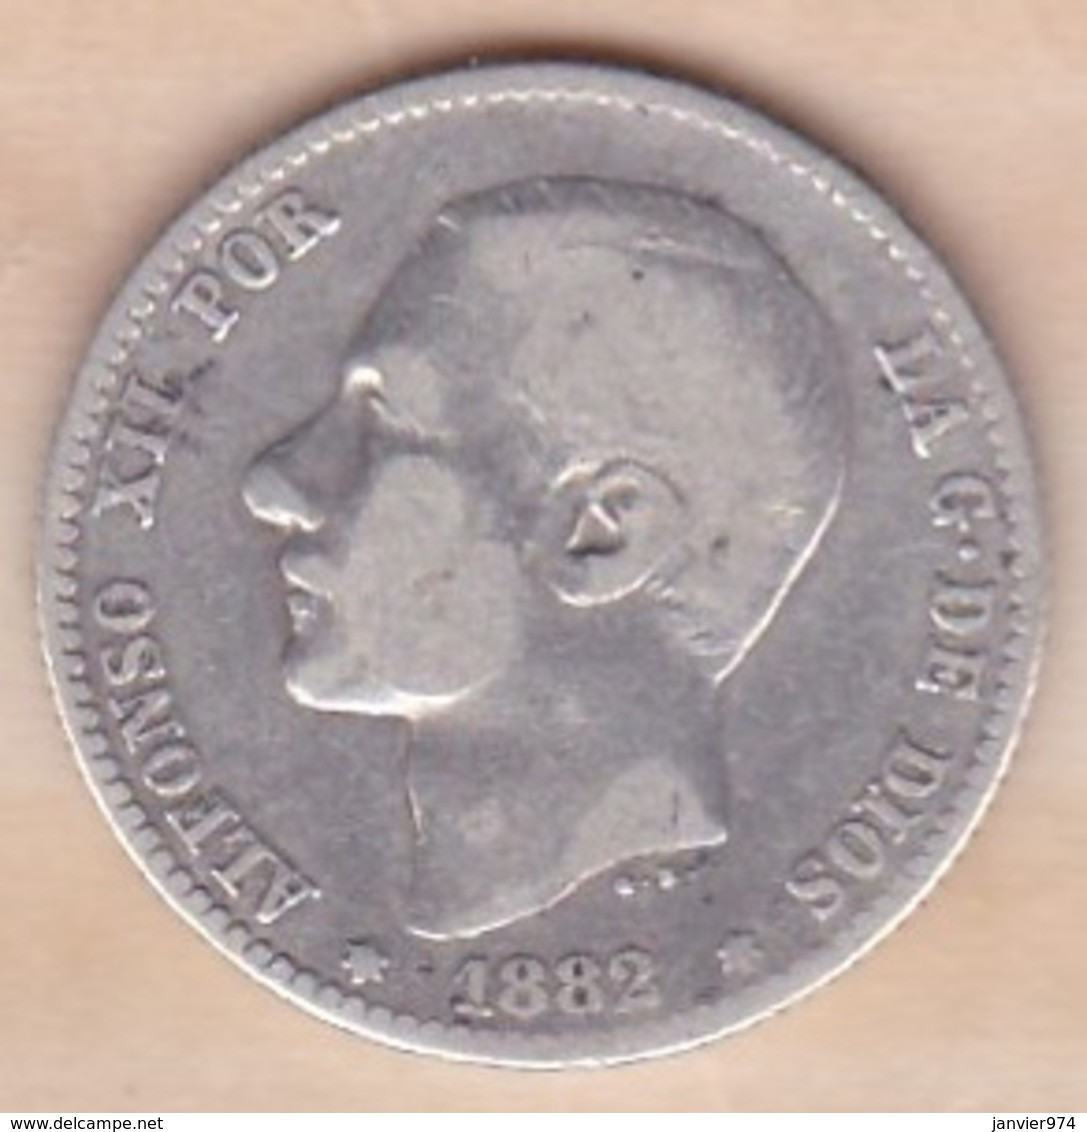 Espagne ,1 Peseta 1882 Alfonso XII , En Argent - First Minting